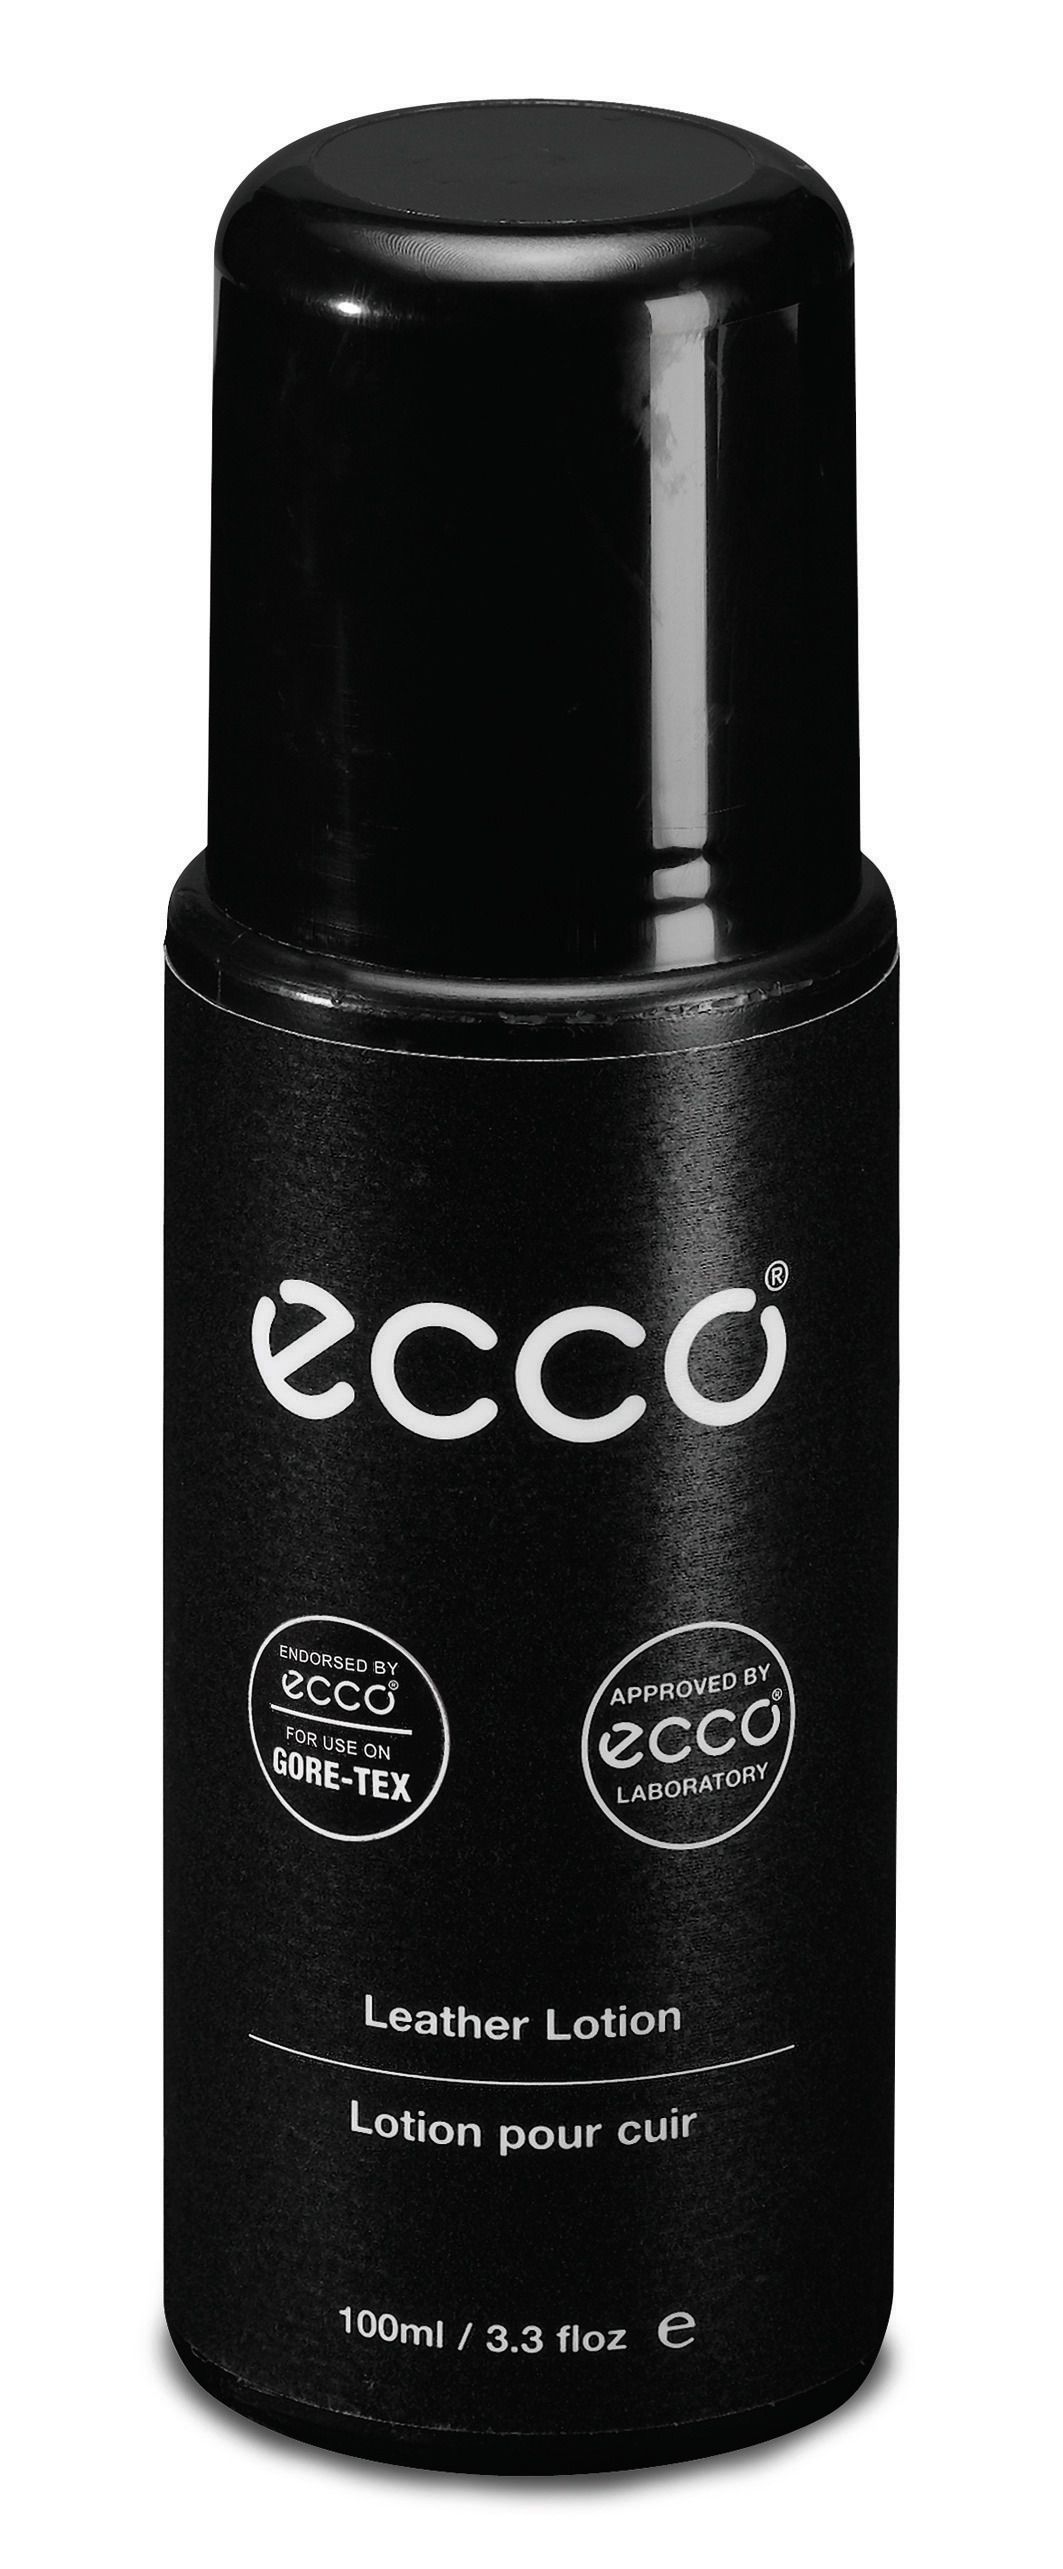 Leather Lotion - ECCO.com